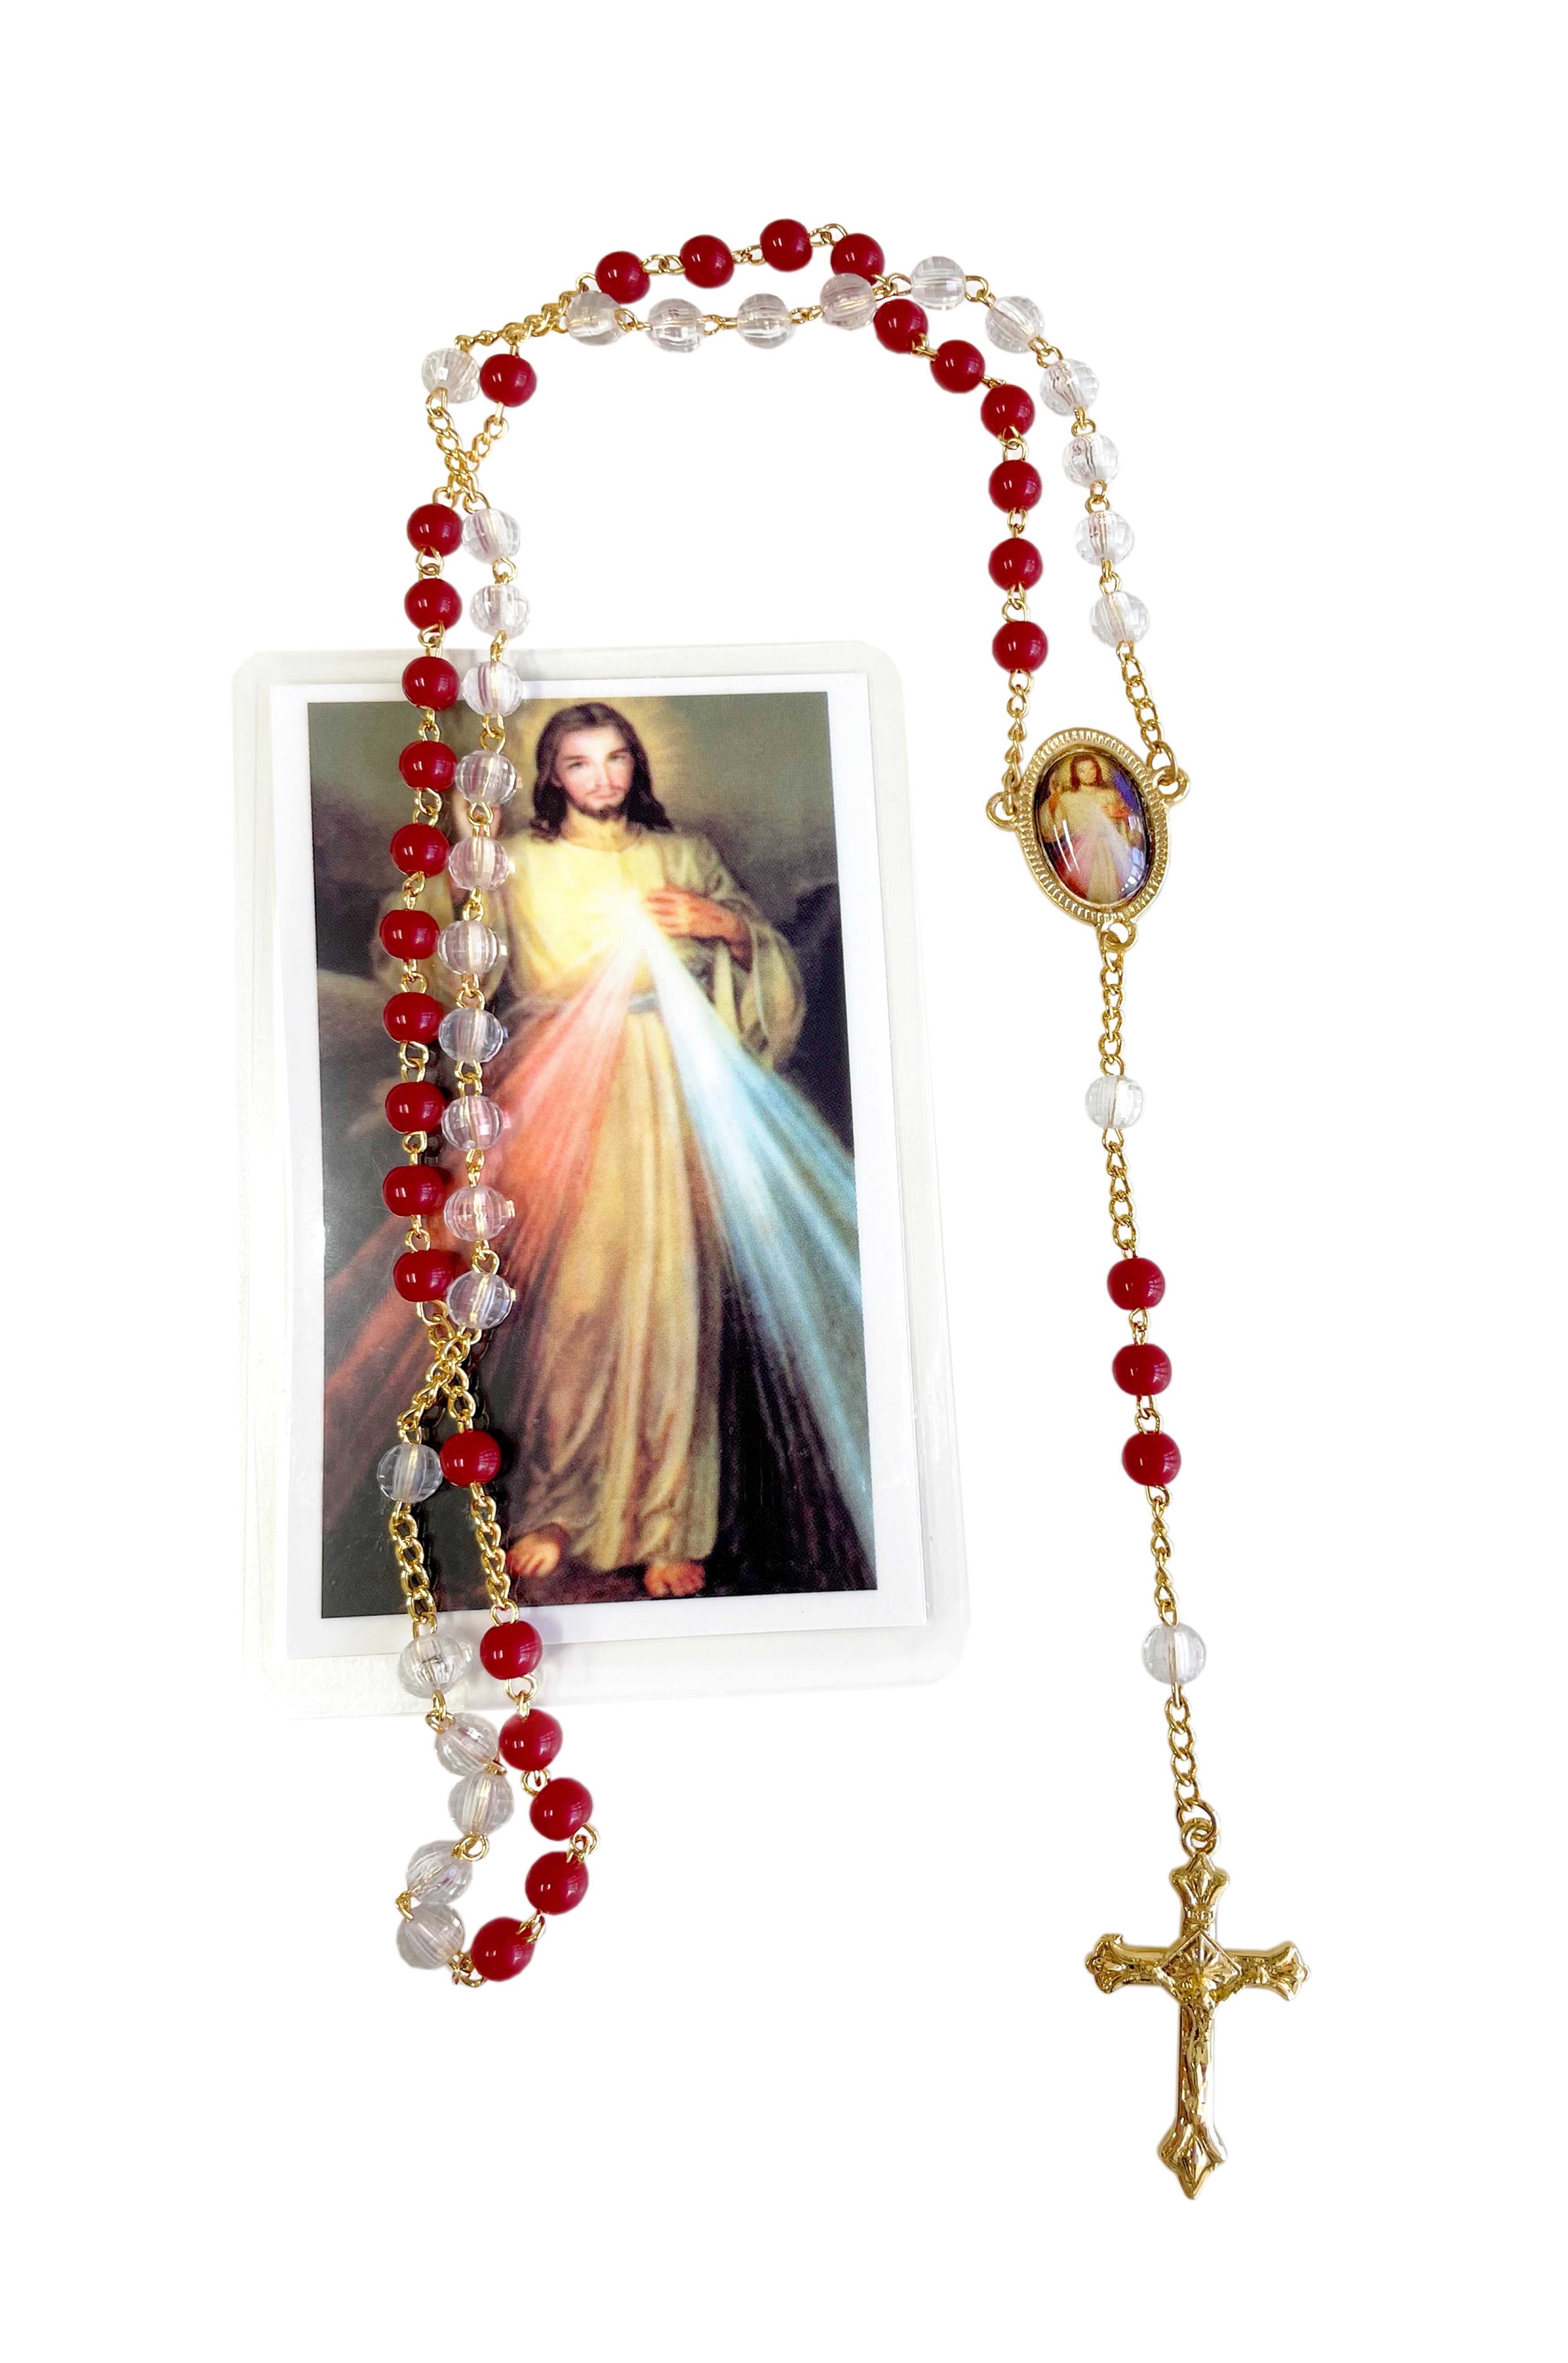 Rosario de la Divina Misericordia - Rosary of Divine Mercy